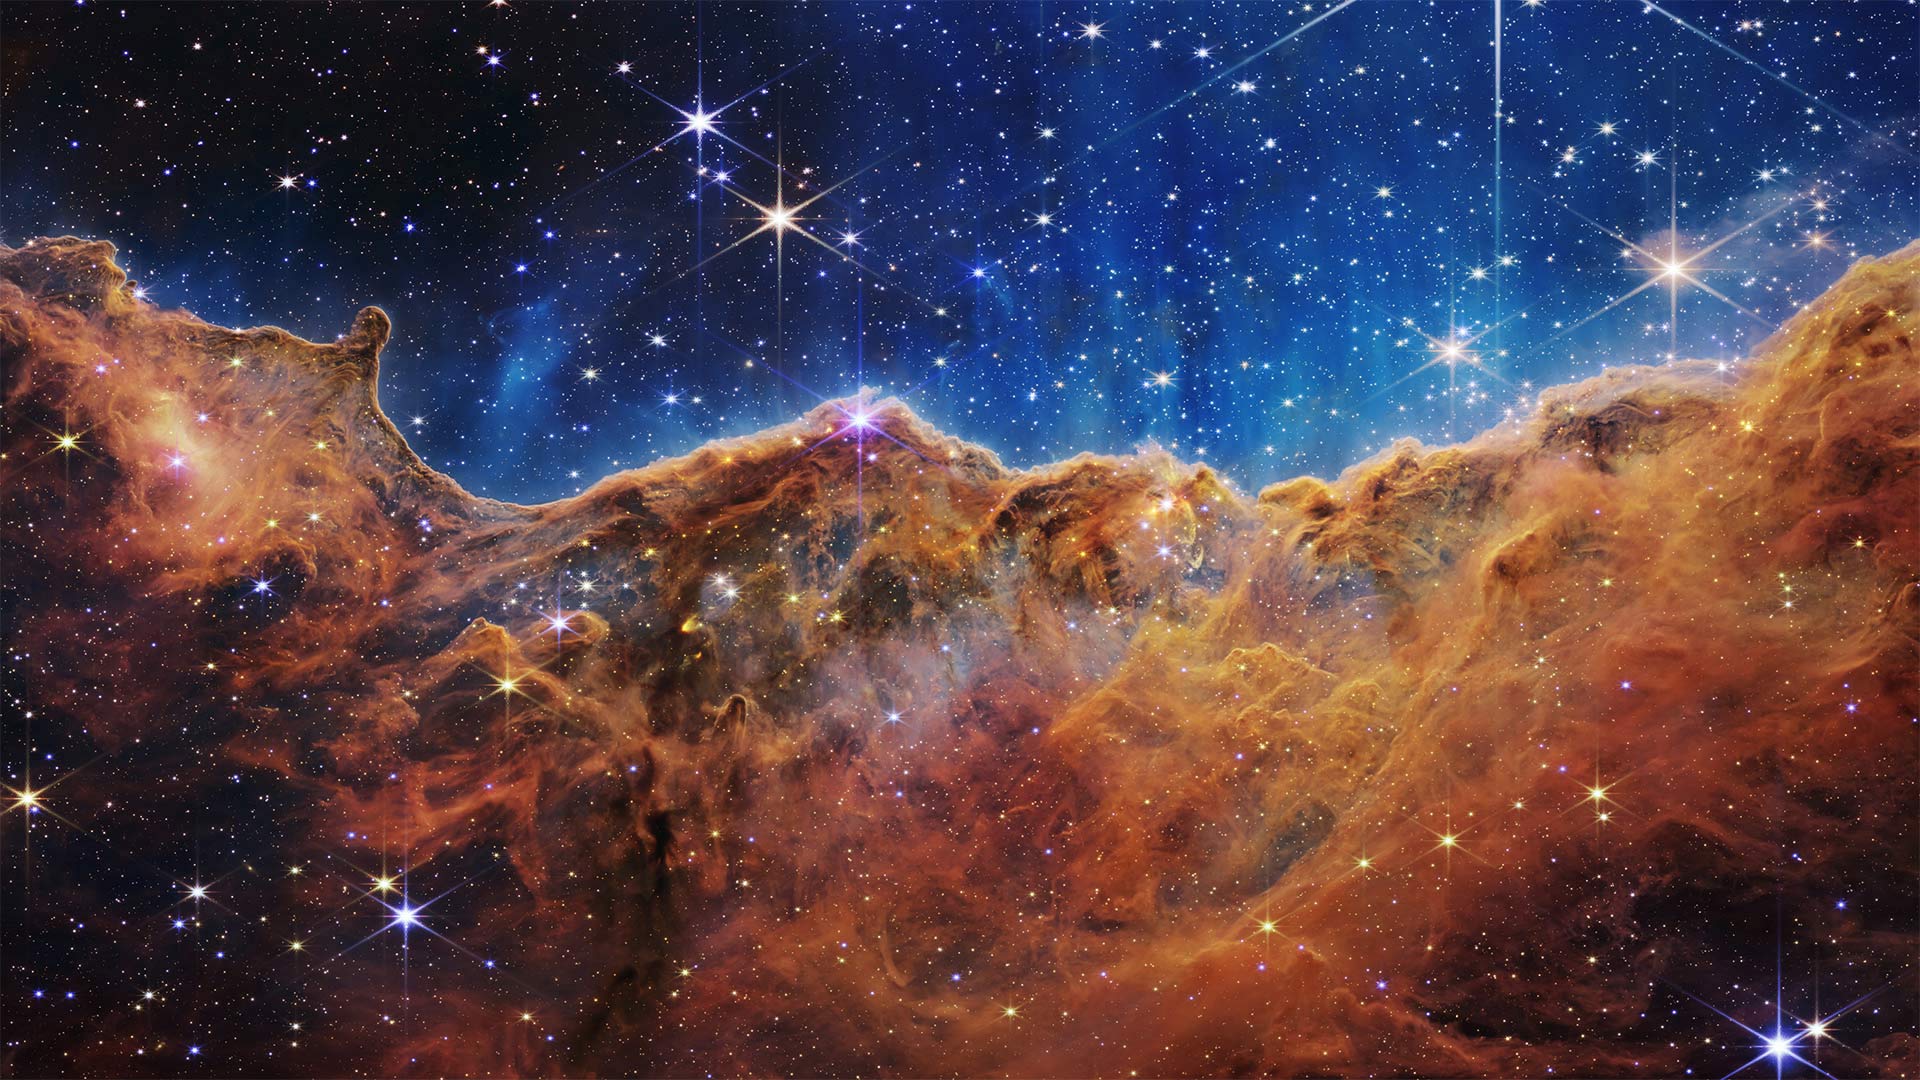 Cosmic Cliffs in the Carina Nebula - NASA, ESA, CSA, and STScI)